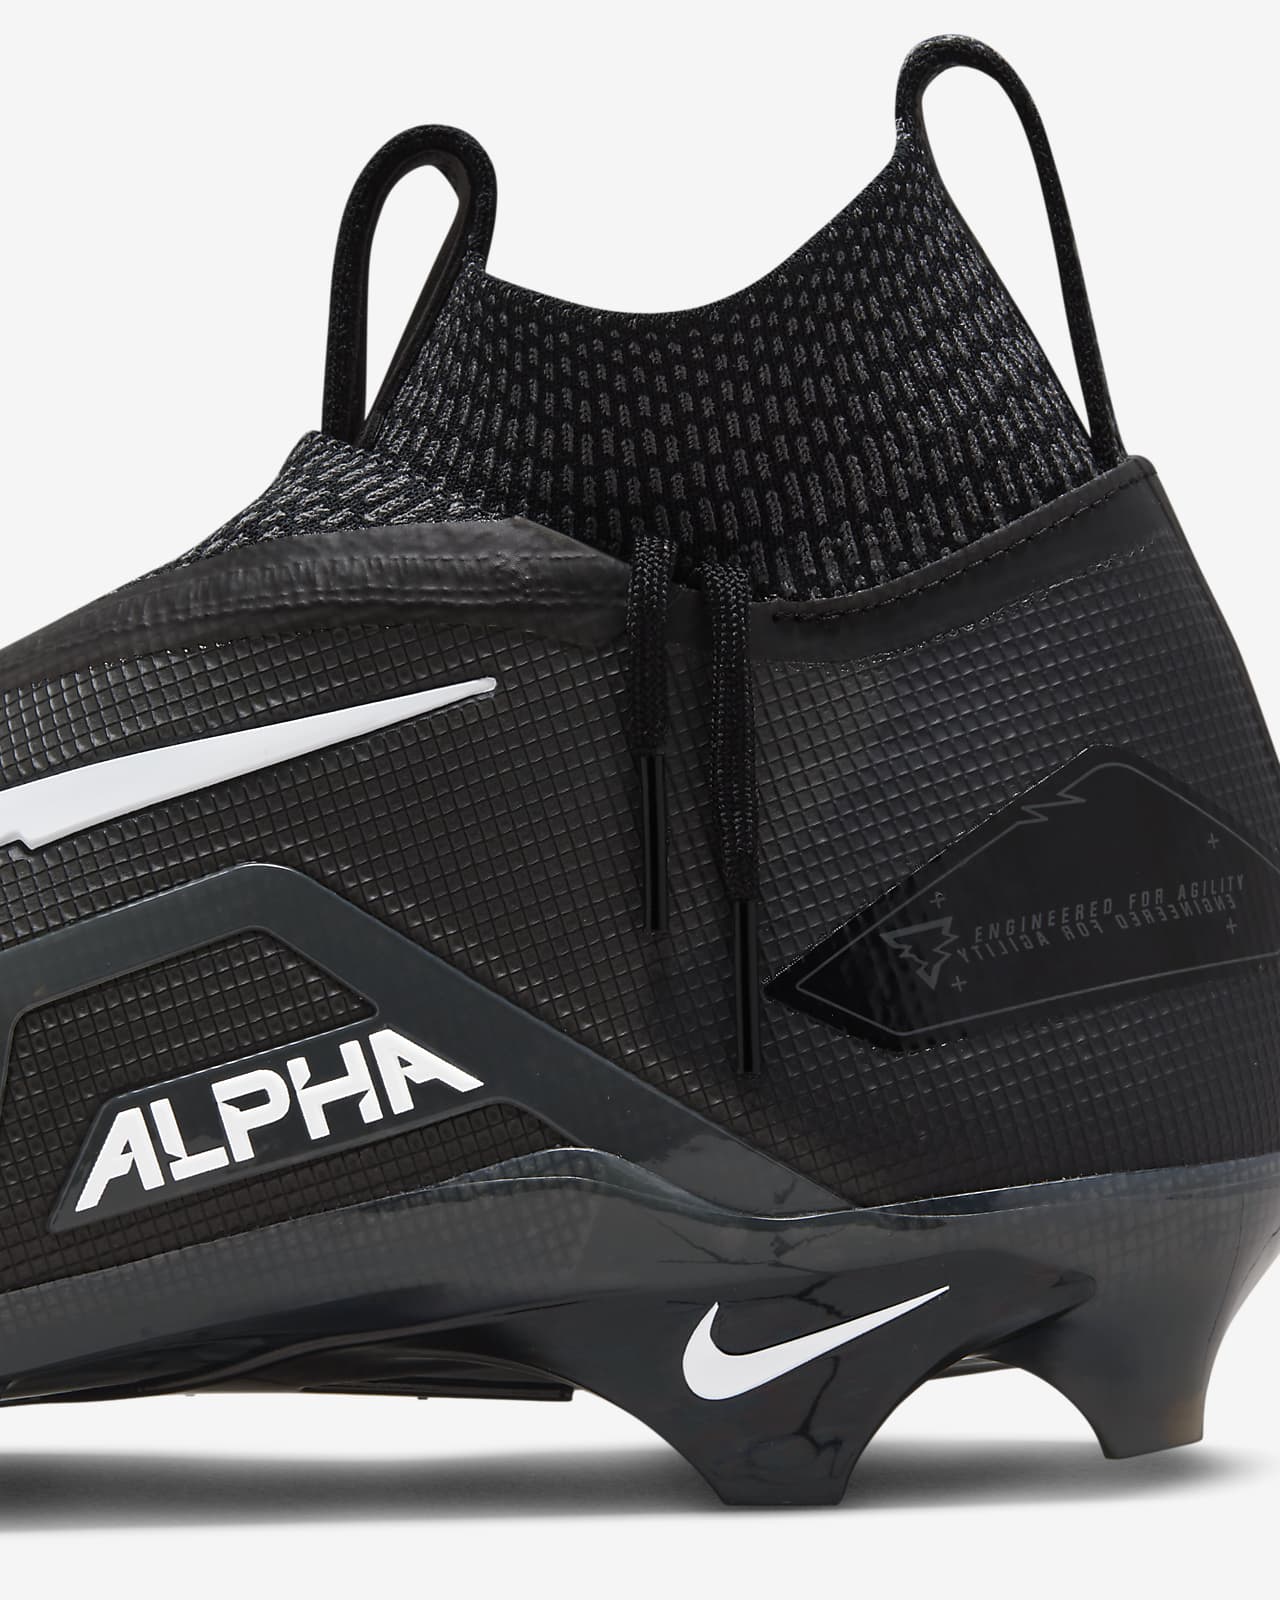 Tacos de fútbol americano Nike Alpha Menace Elite 3 para hombre